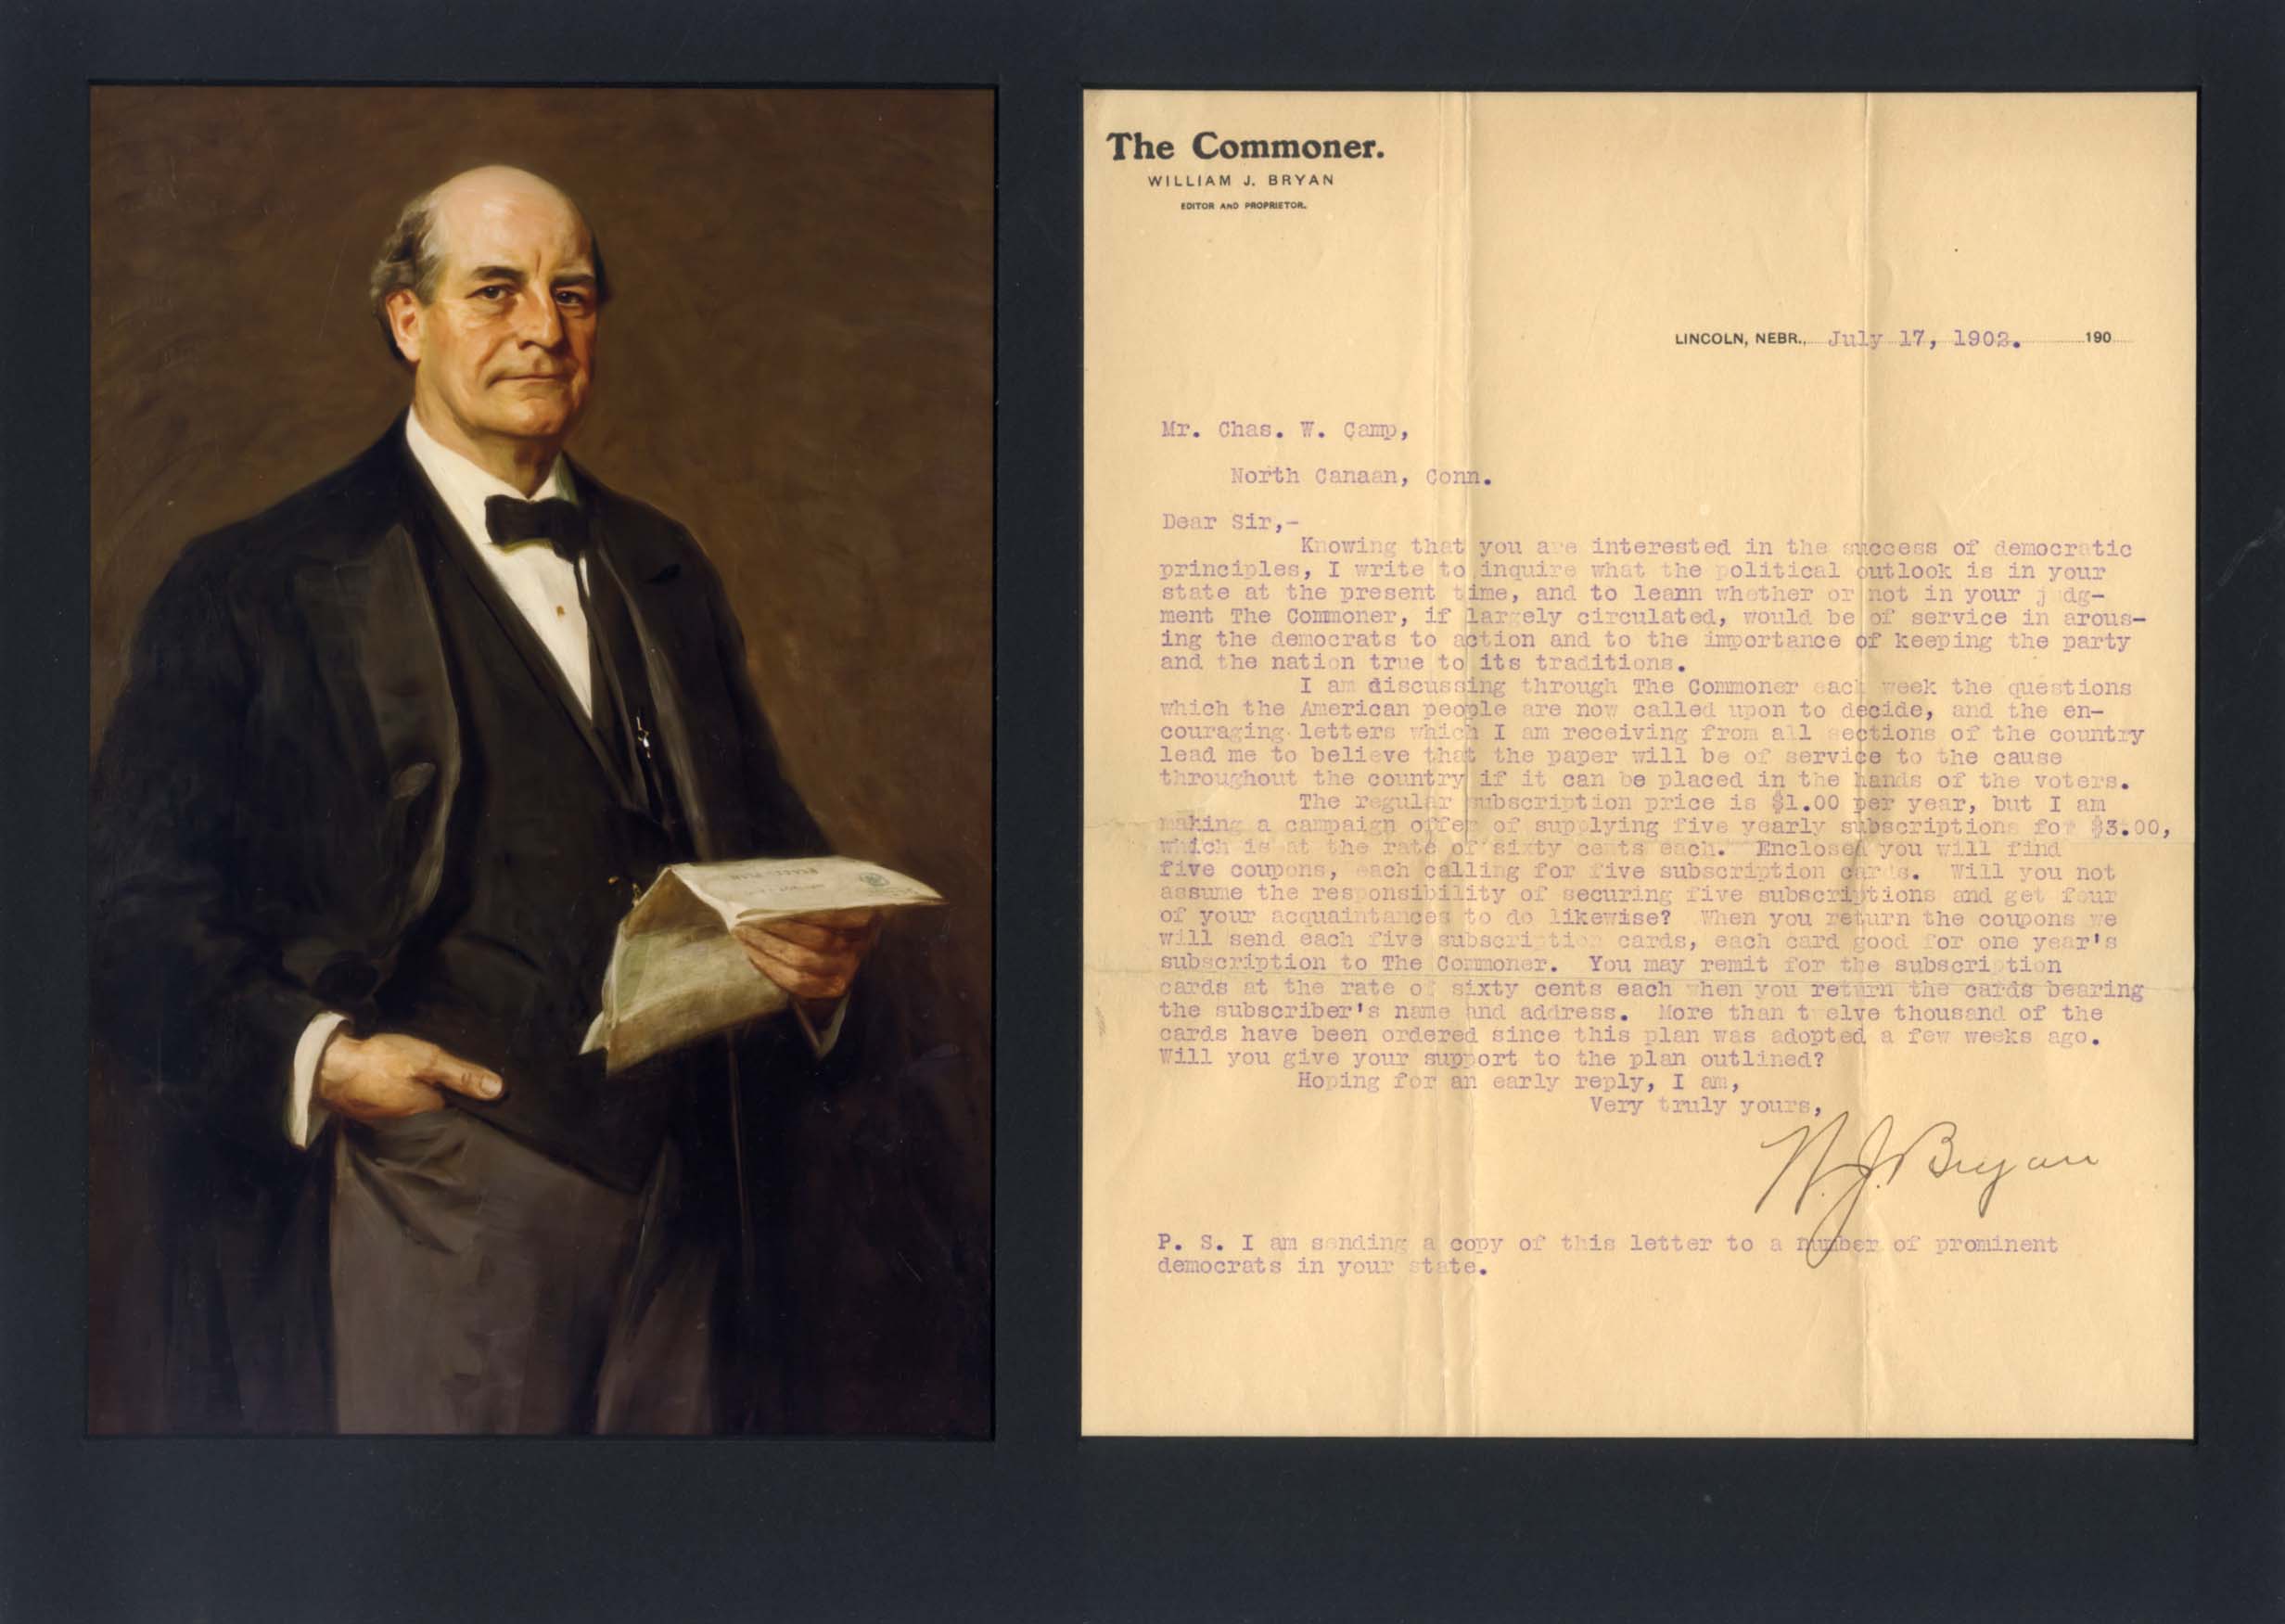 William Jennings Bryan Autograph Autogramm | ID 7977699868821